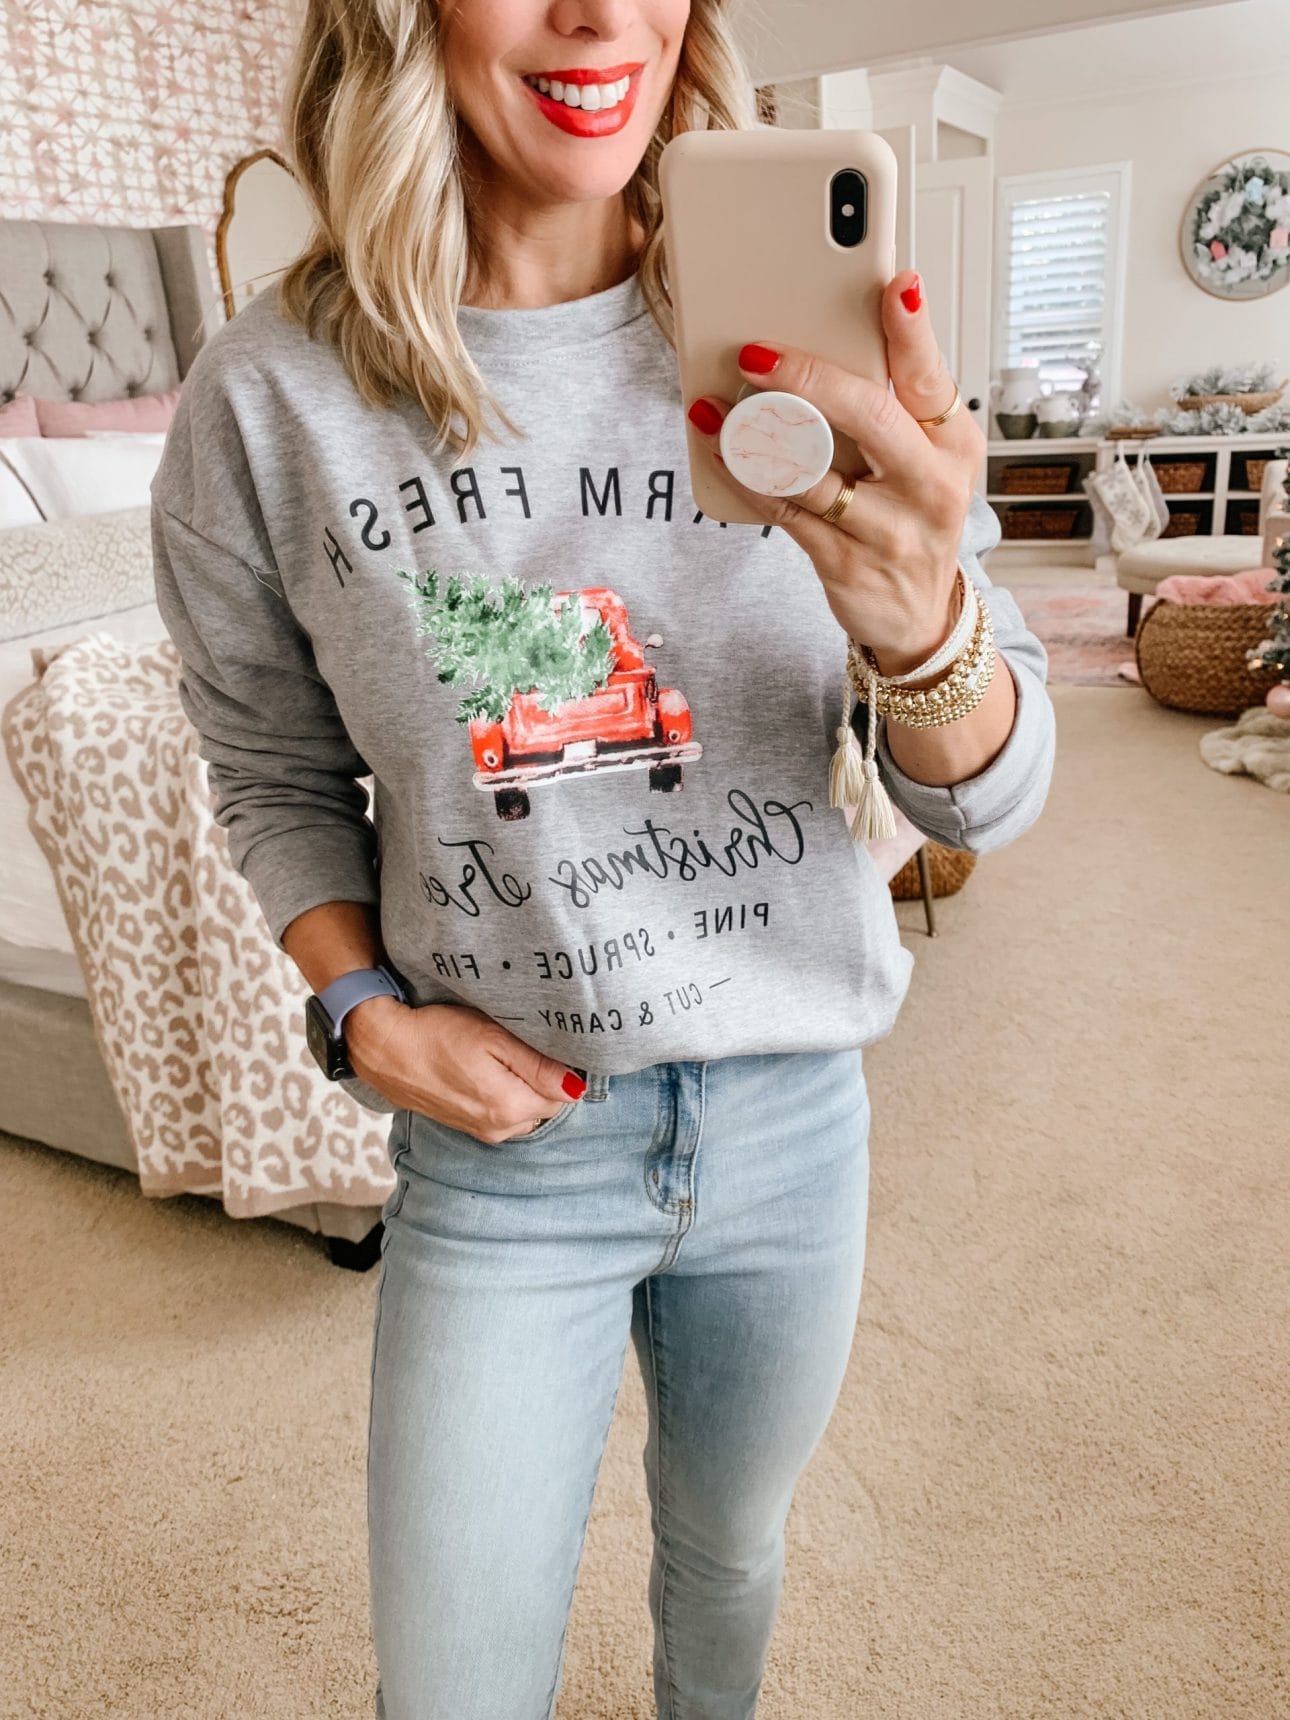 Amazon Fashion, Christmas Sweatshirt, Jeans, Leopard Keds 